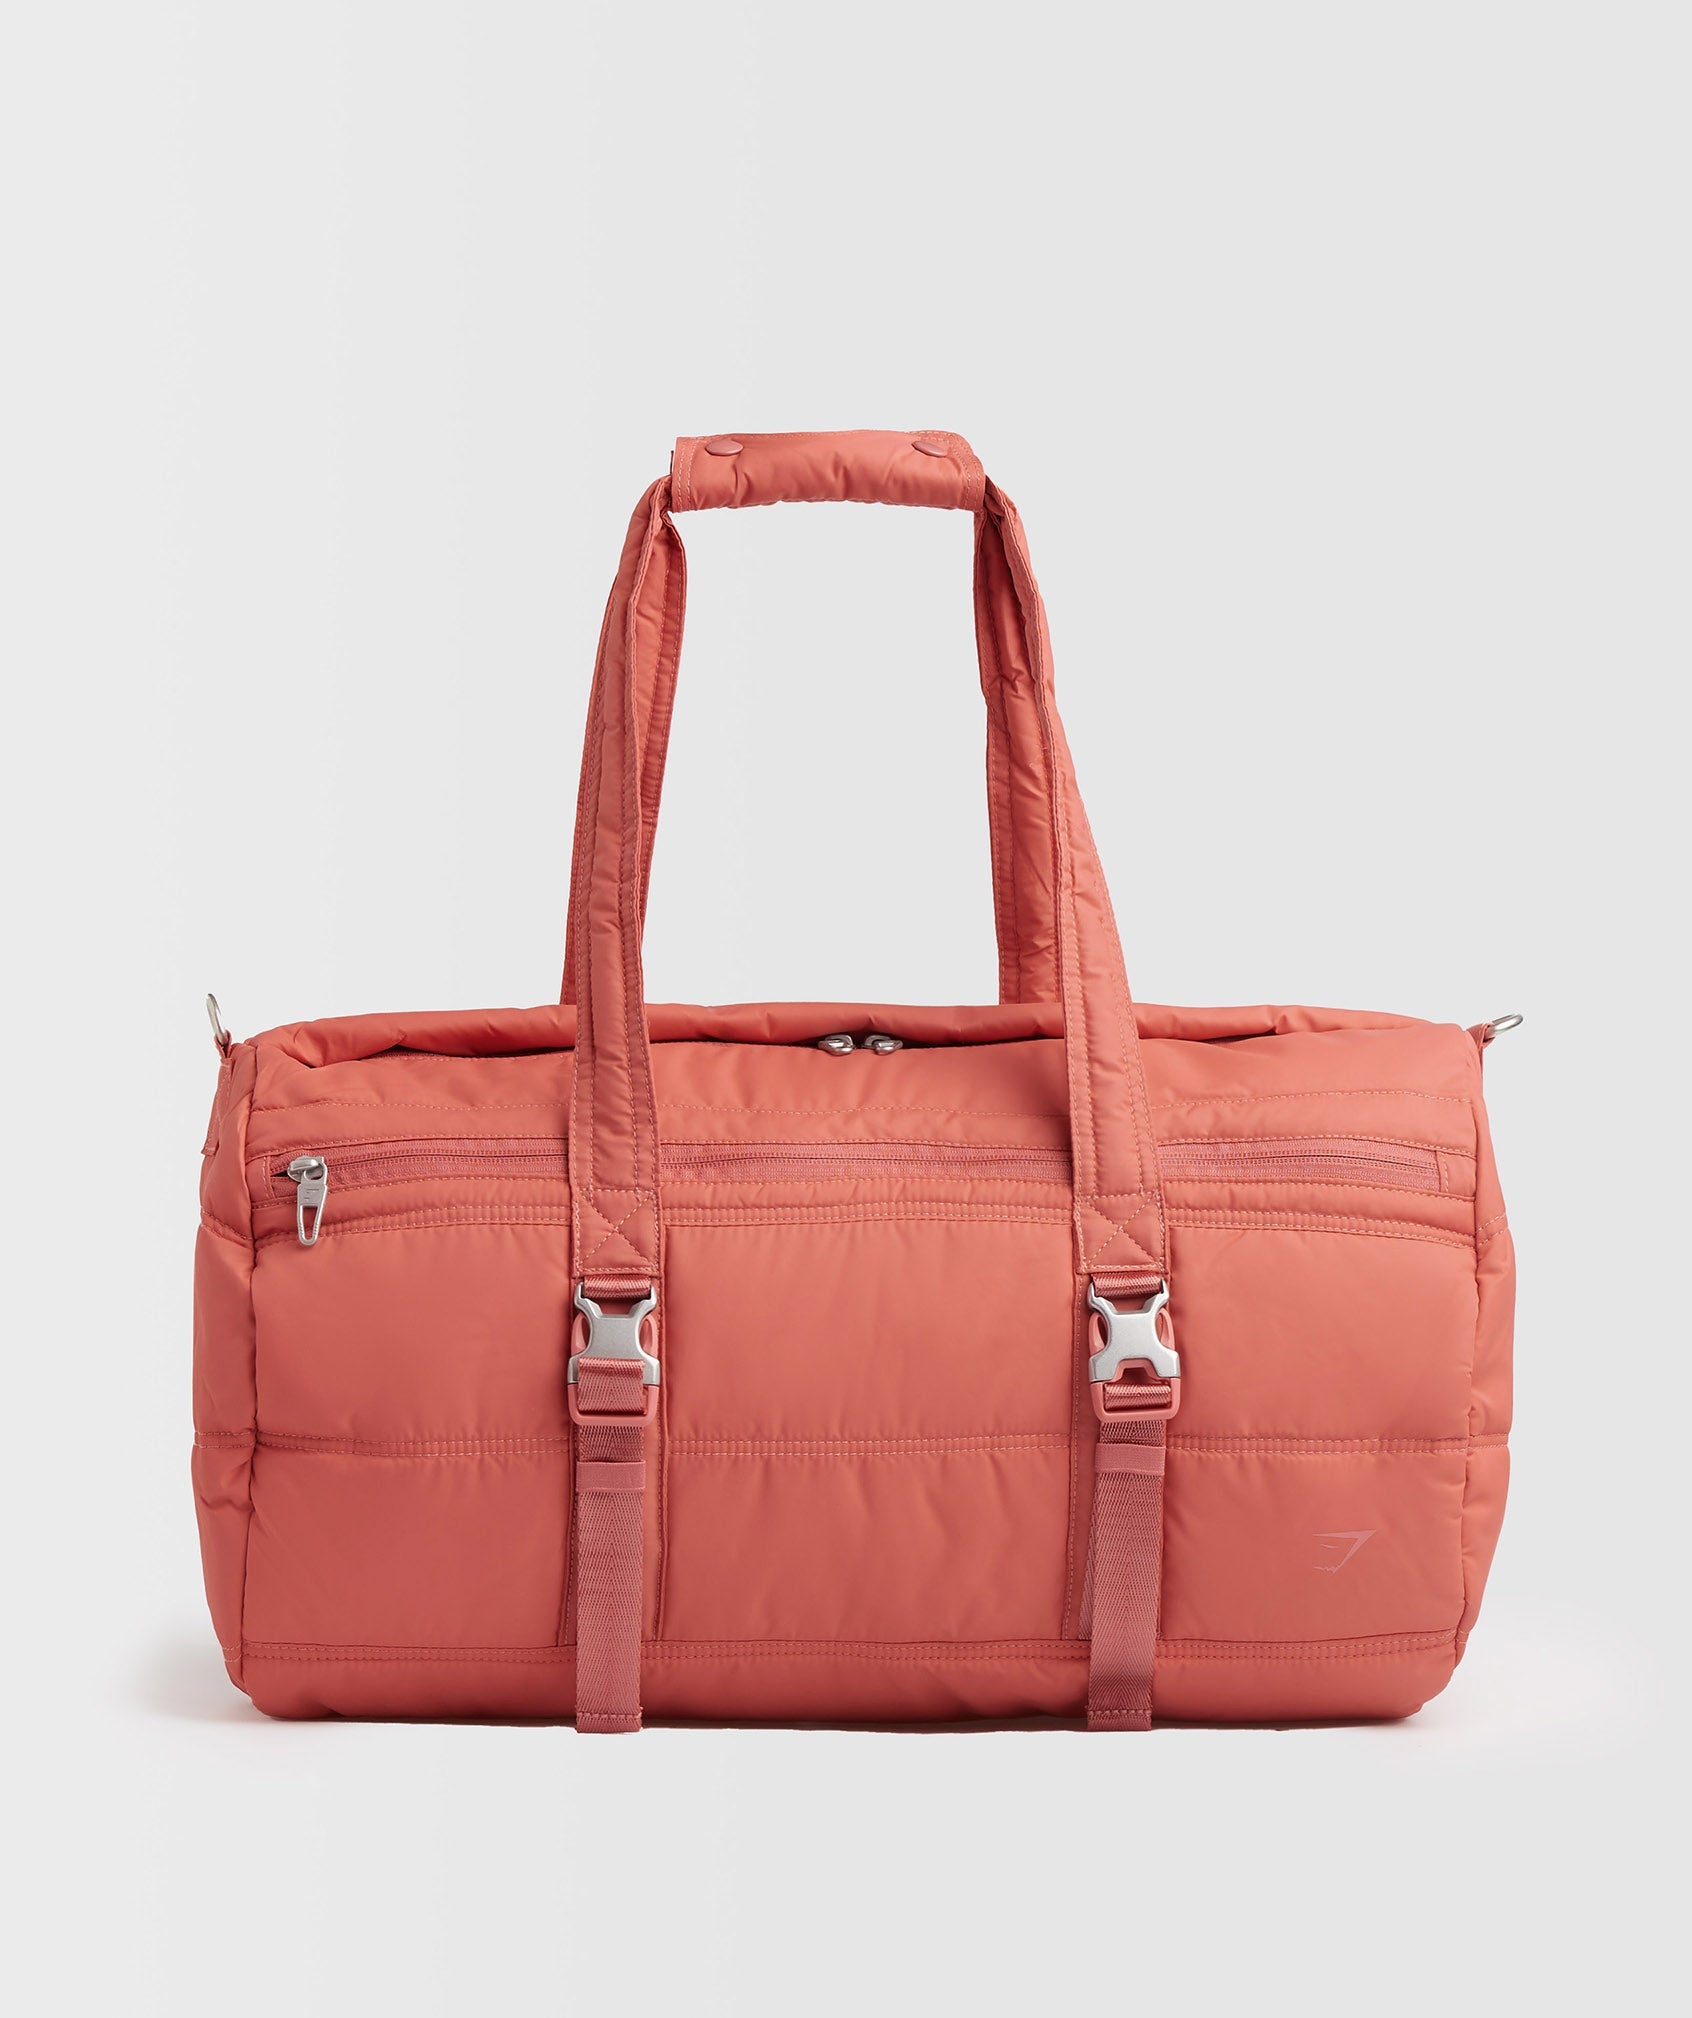 Premium Lifestyle Barrel Bag in Terracotta Pink